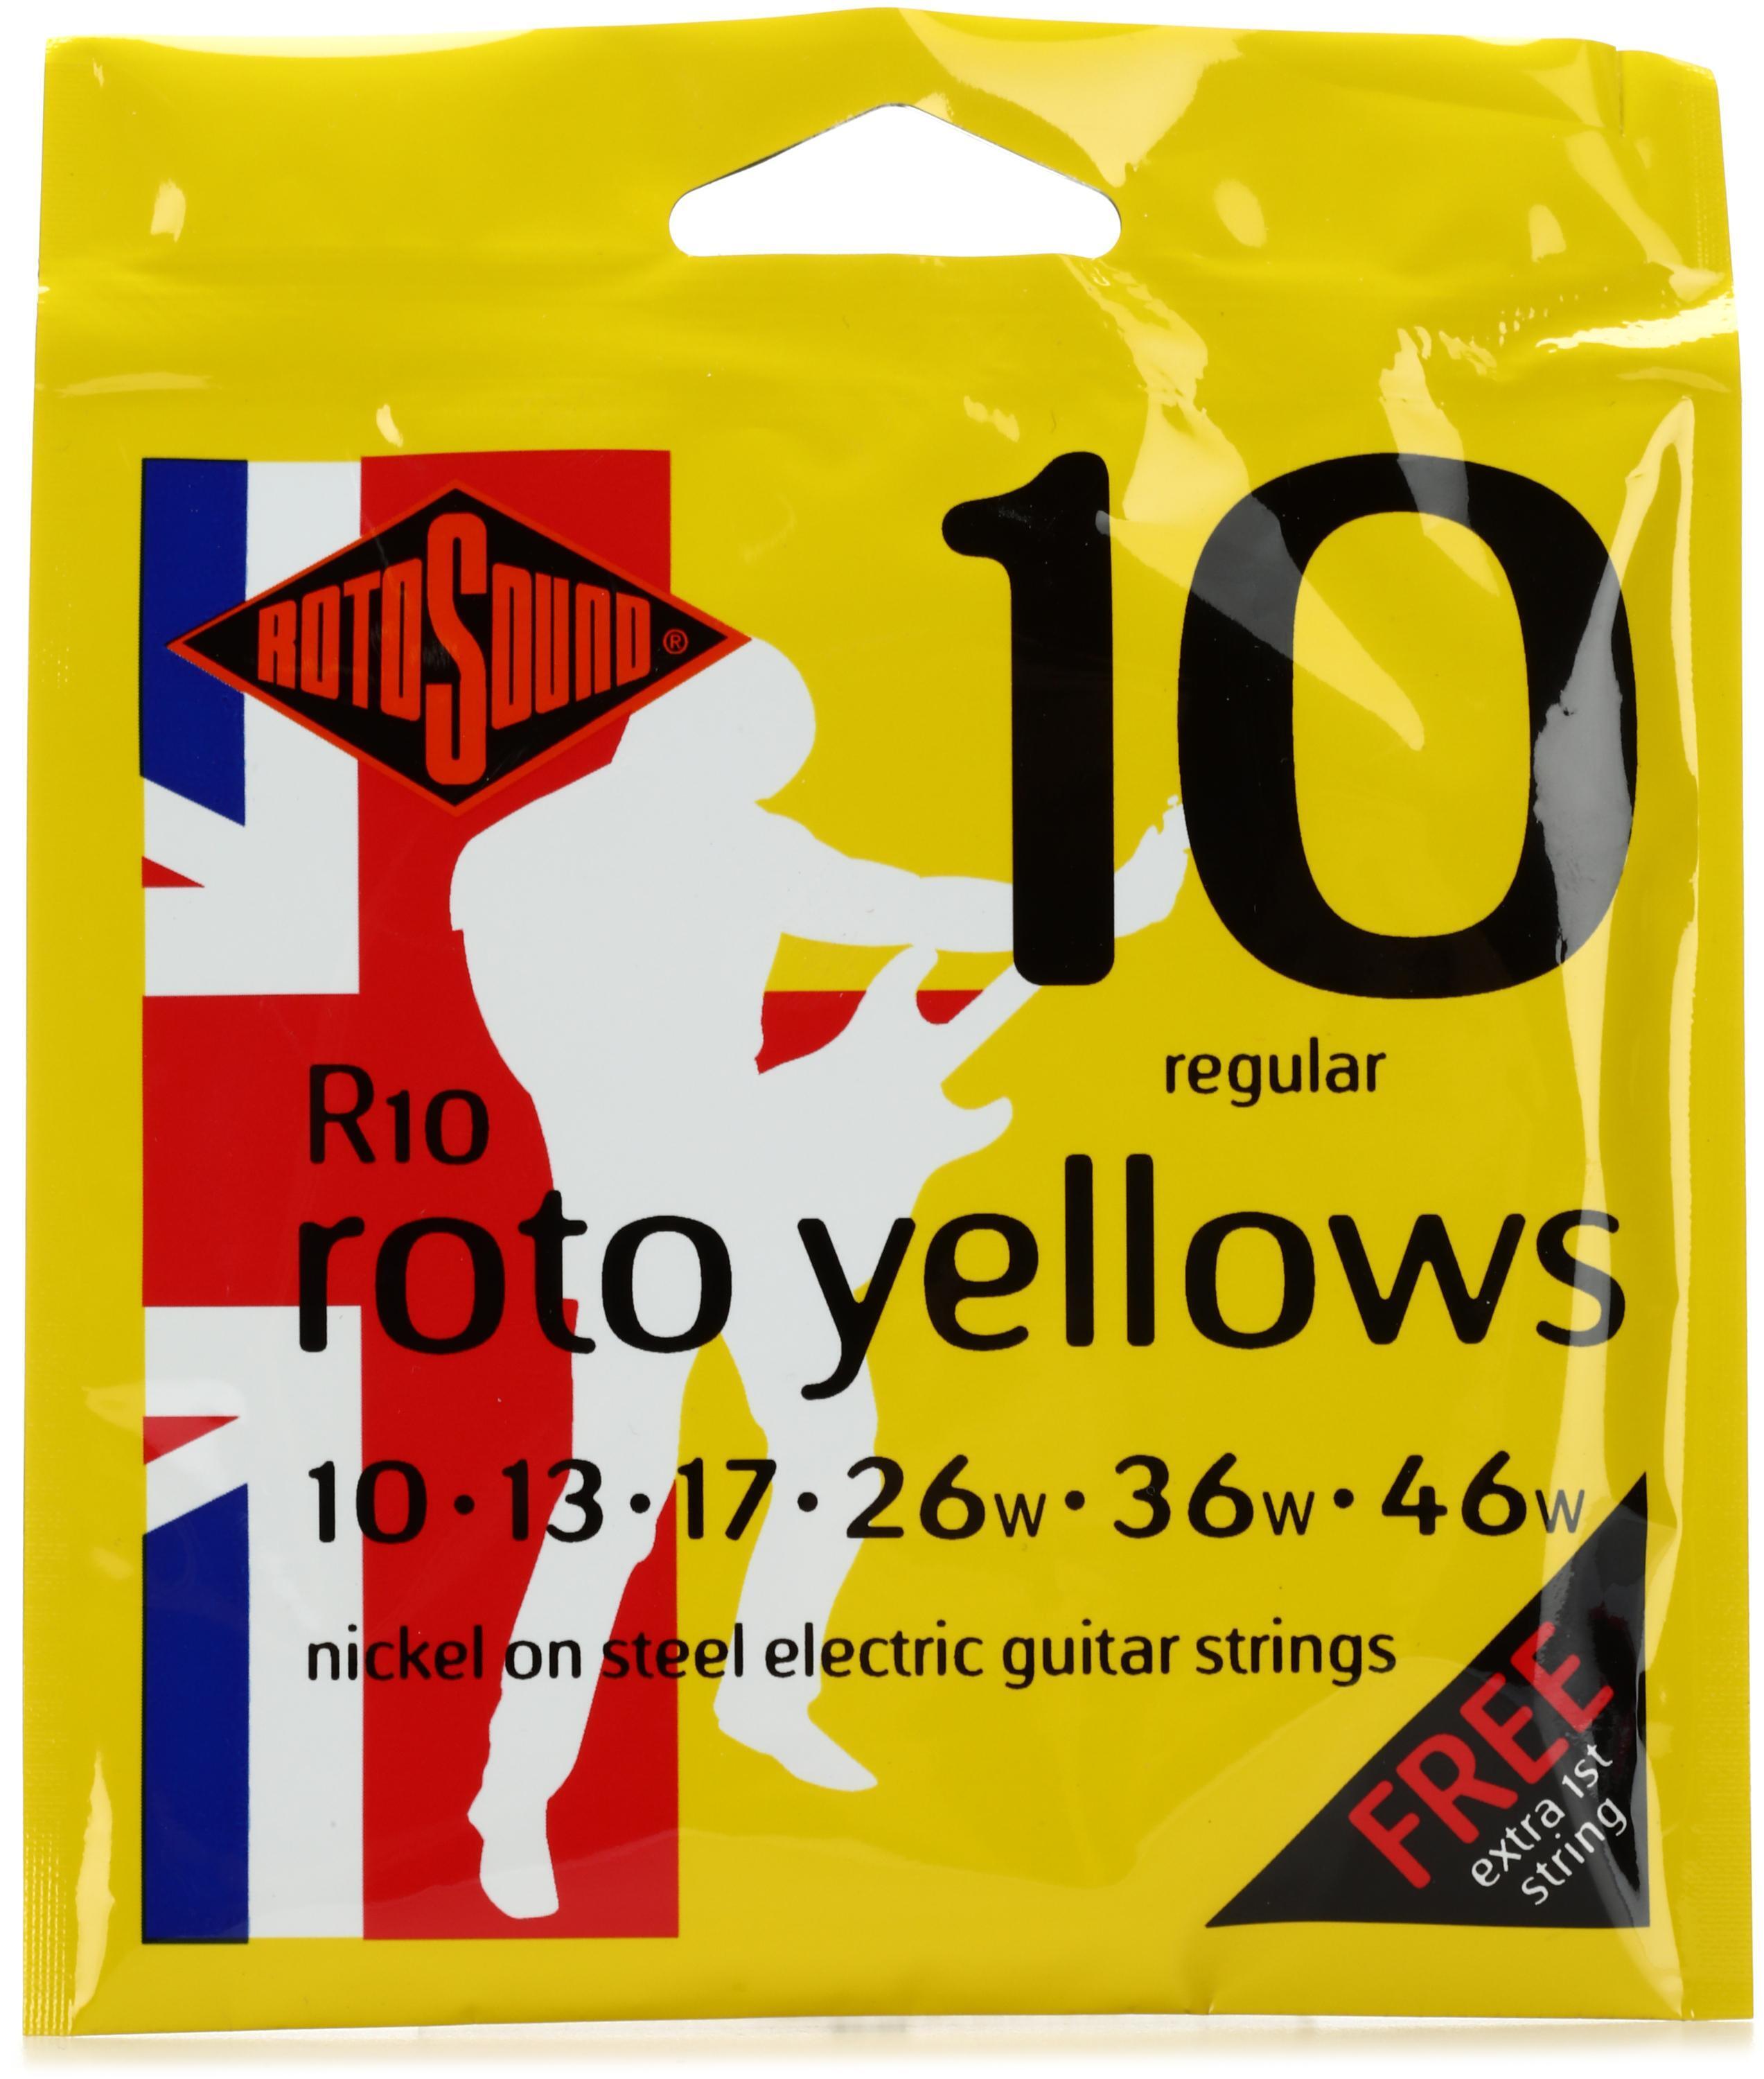 Rotosound R10 Roto Yellows Nickel On Steel Electric Guitar Strings -  .010-.046 Regular